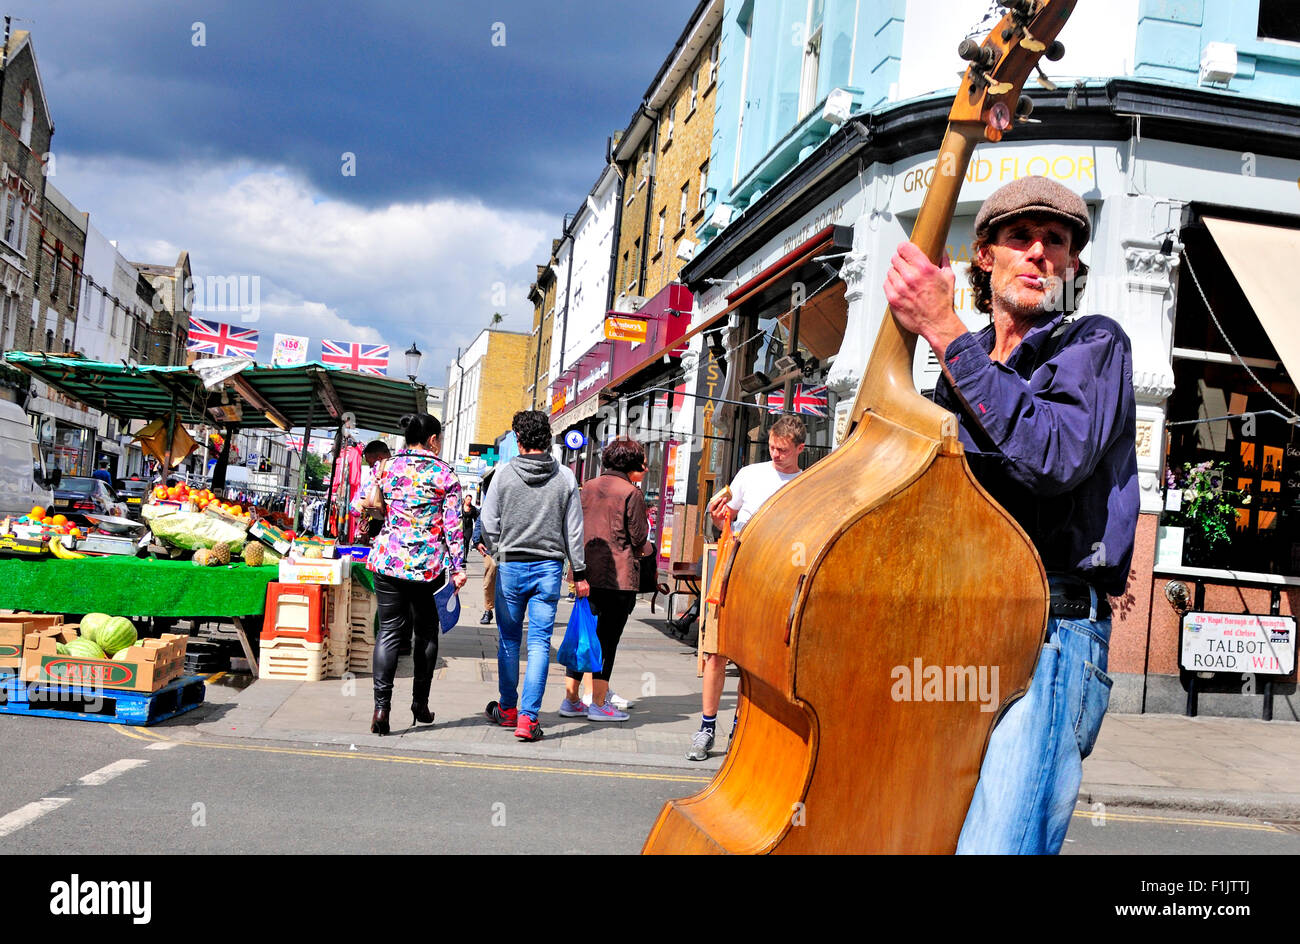 London, England, UK. Portobello Road - busker playing the double bass Stock Photo